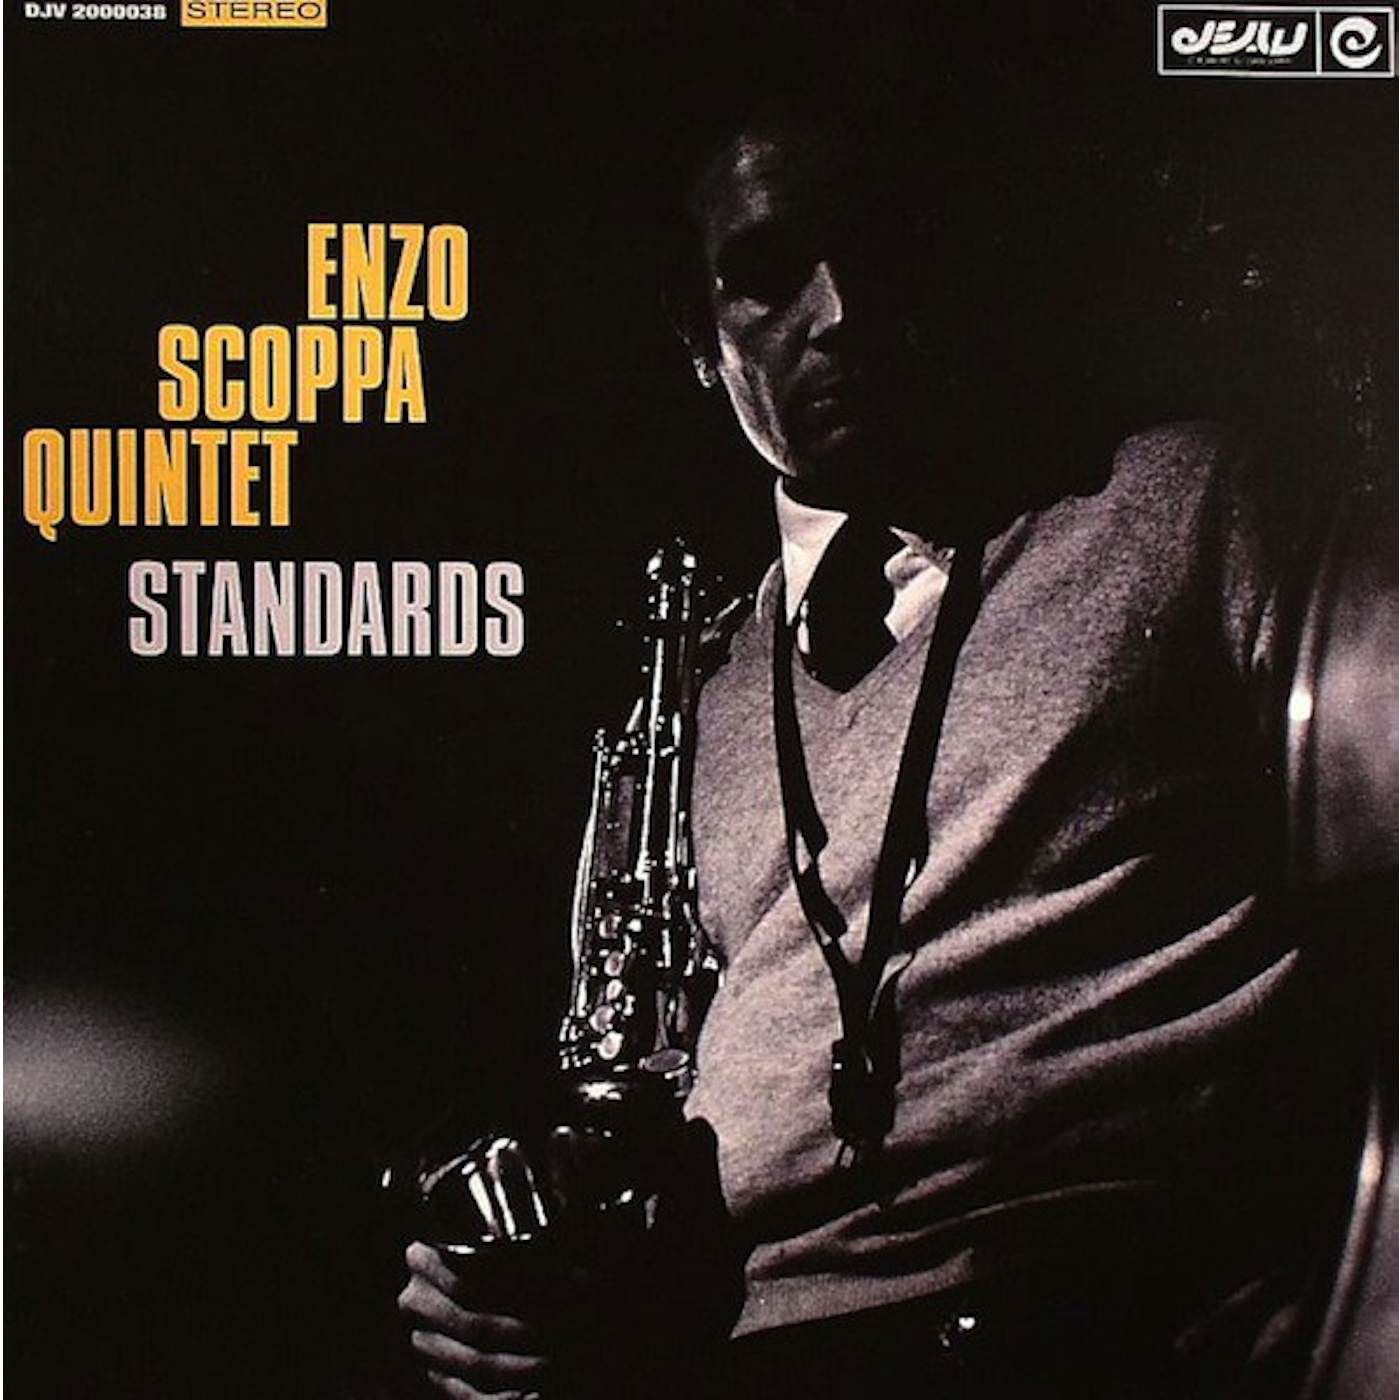 Enzo Quintet Scoppa STANDARDS Vinyl Record